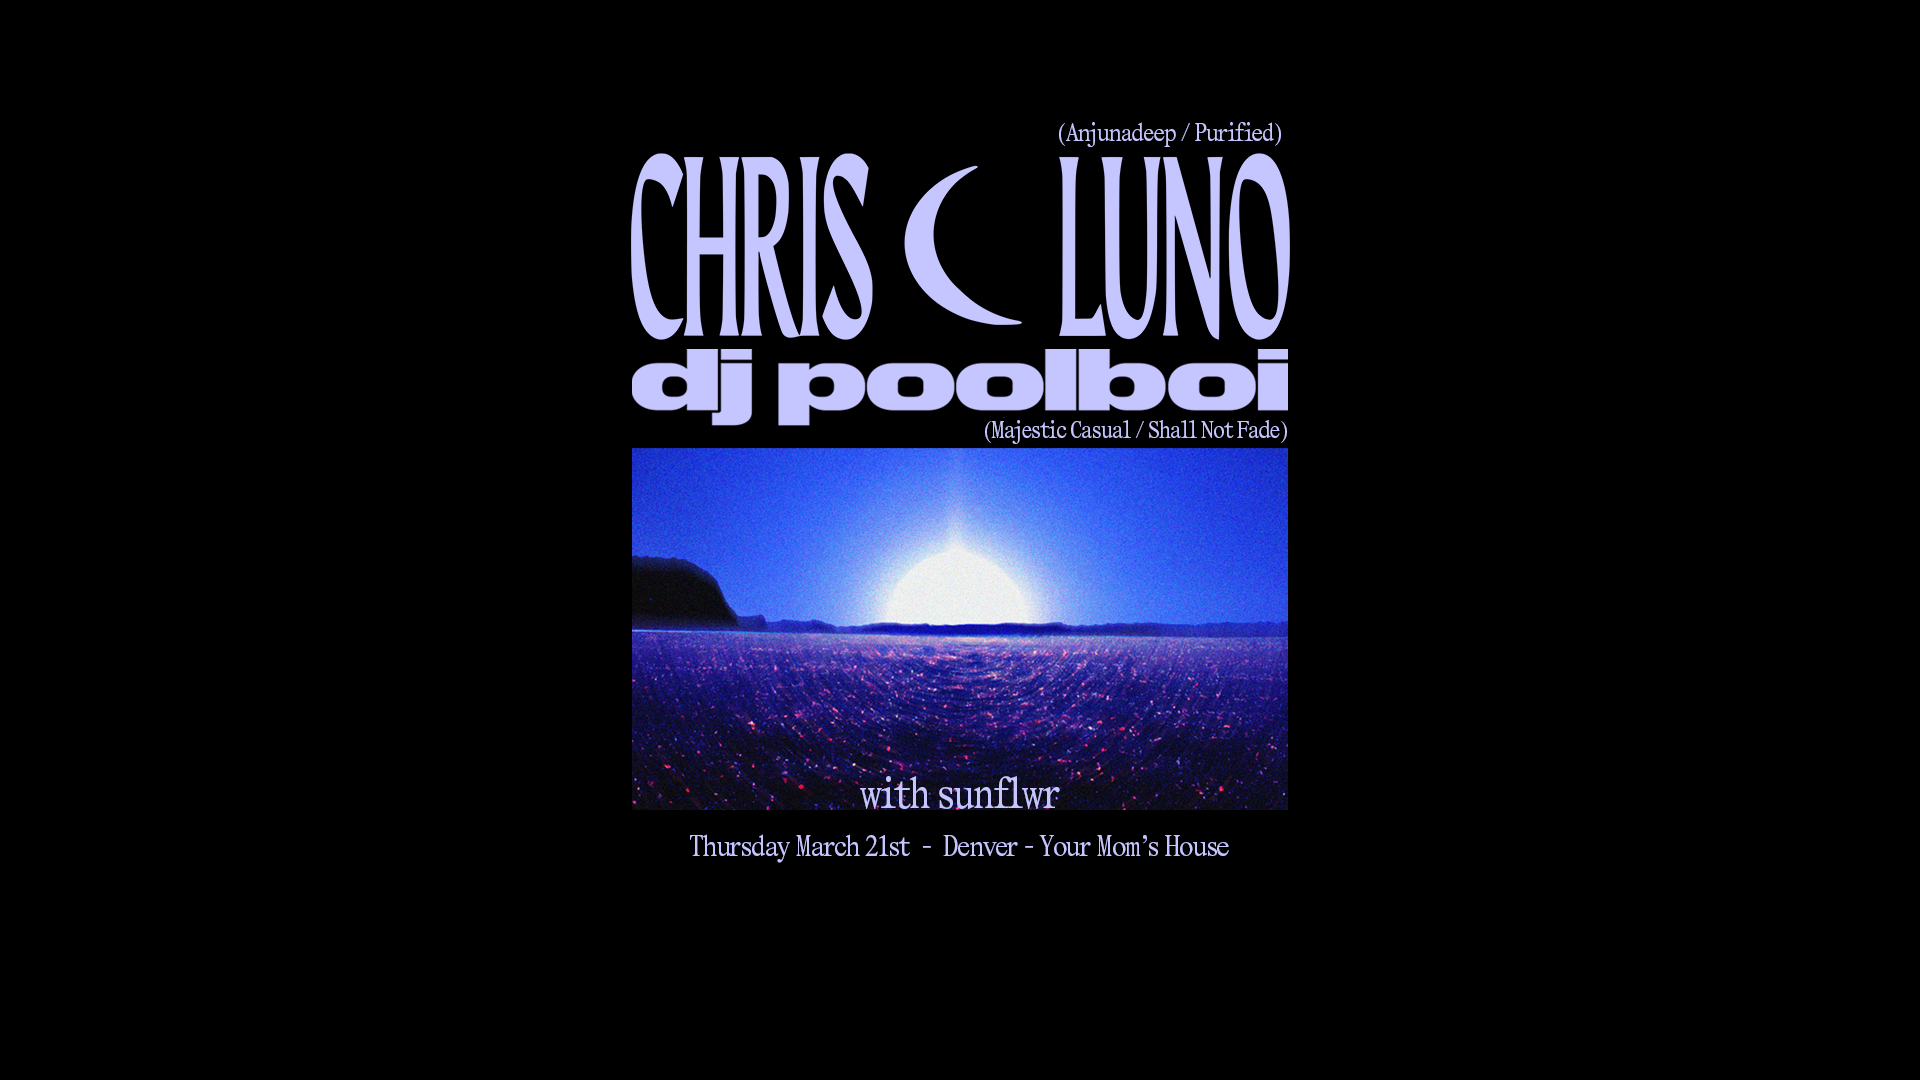 Chris Luno (Anjunadeep/Purified) dj poolboi (Majestic Casual/Shall Not Fade) & sunflwr - フライヤー表